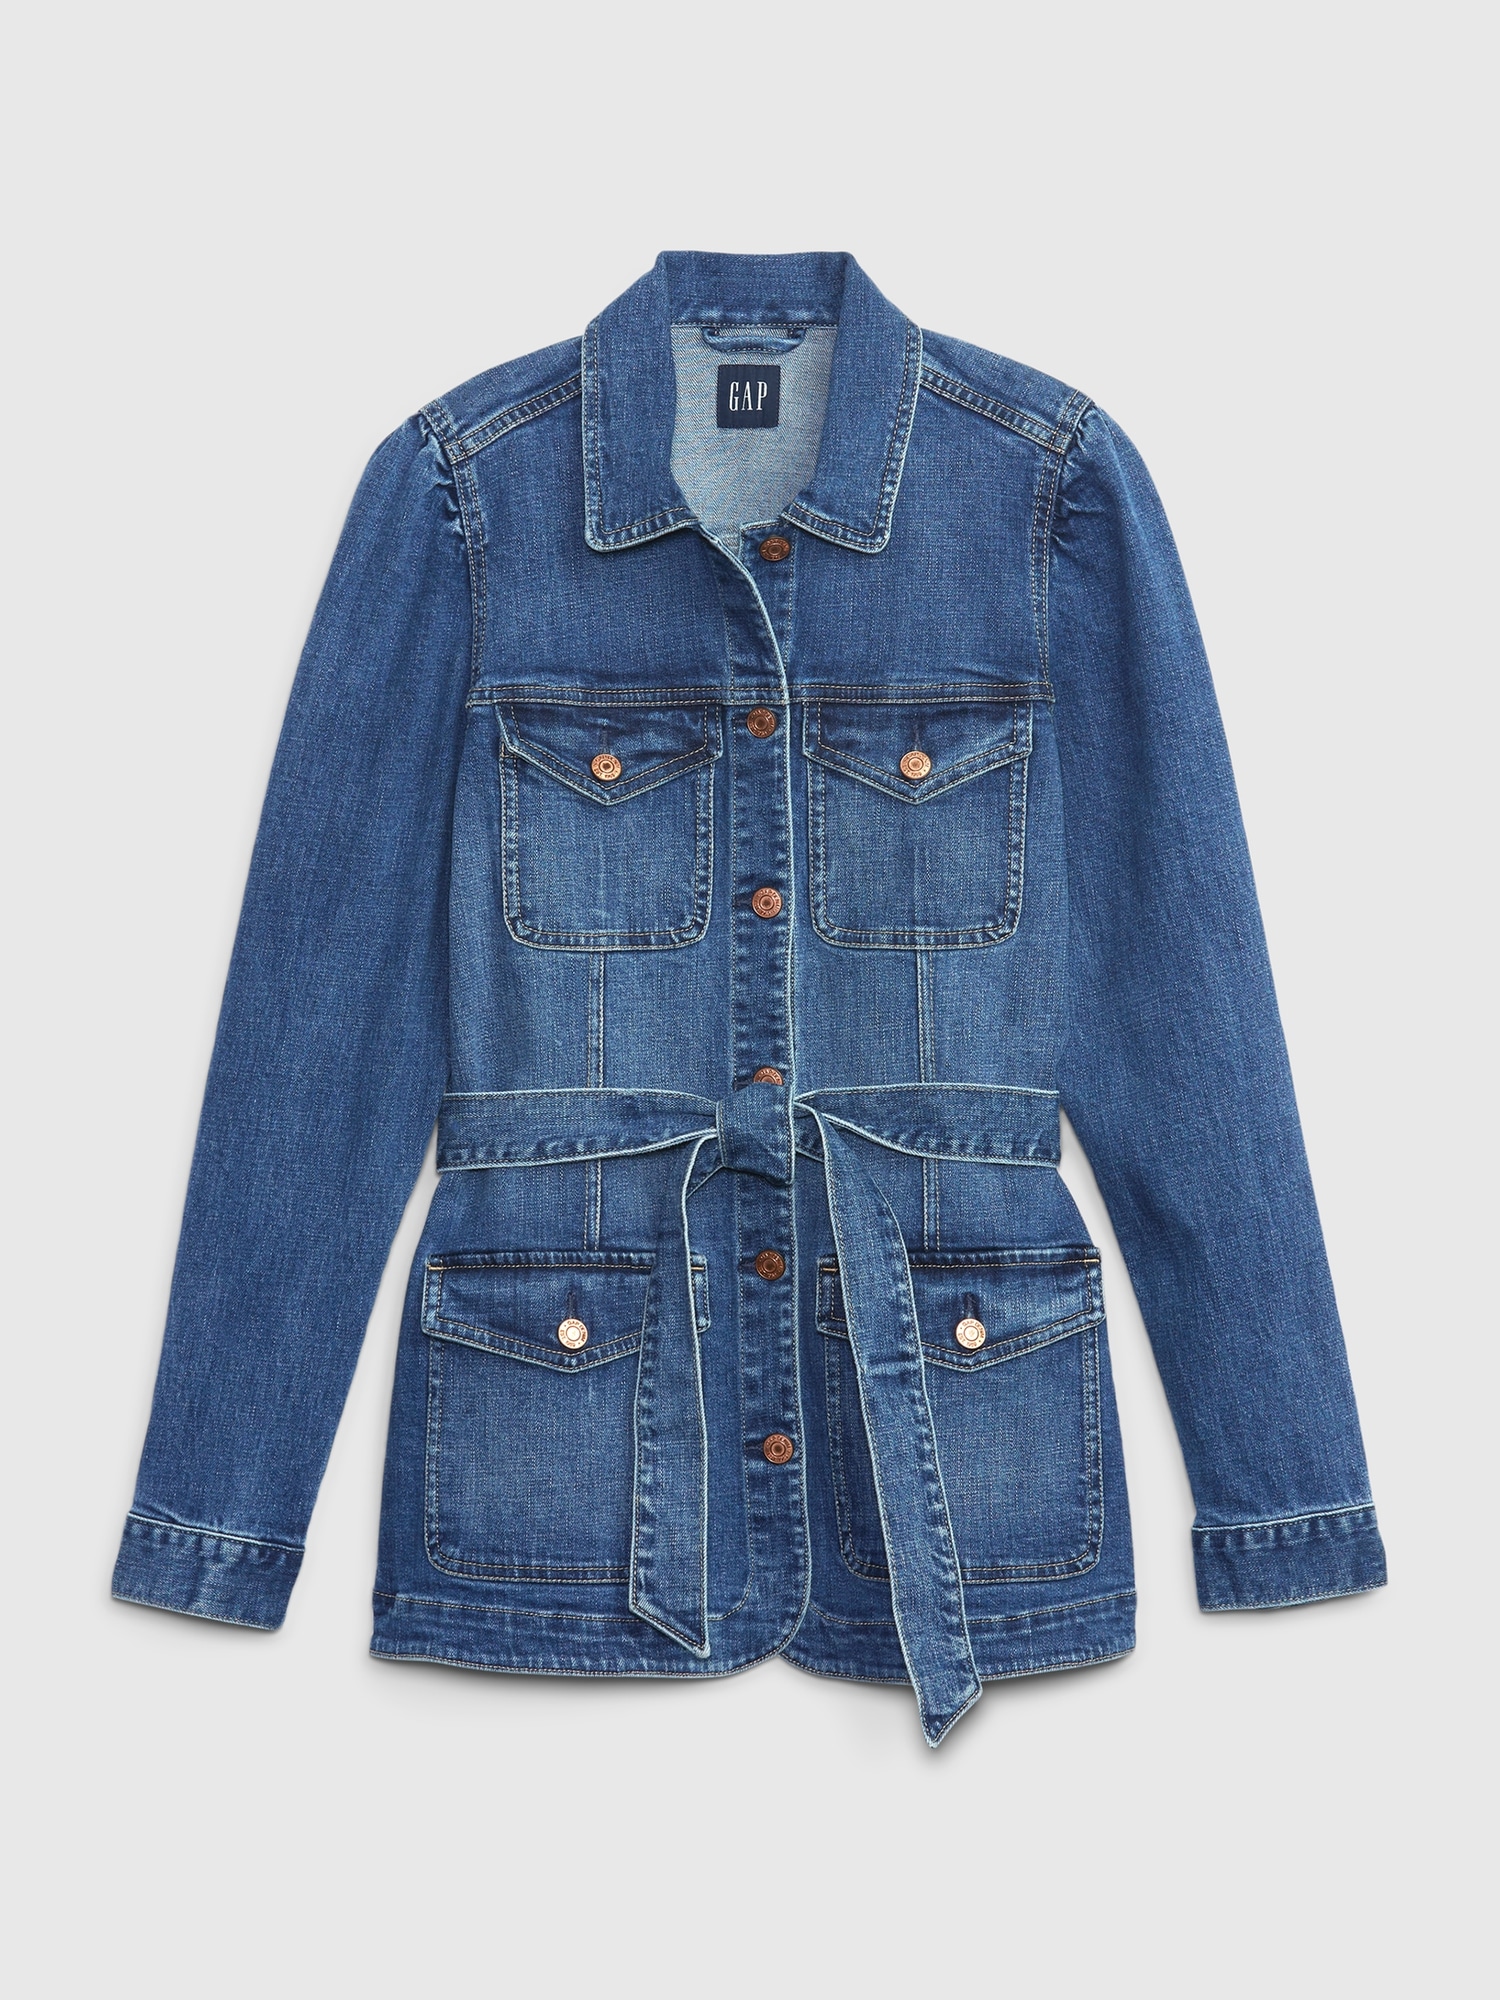 2020 Stylish Denim Jacket For Girls | Girls Jacket | Jeans Jacket For Girls  |Denim Jacket For Girls - YouTube